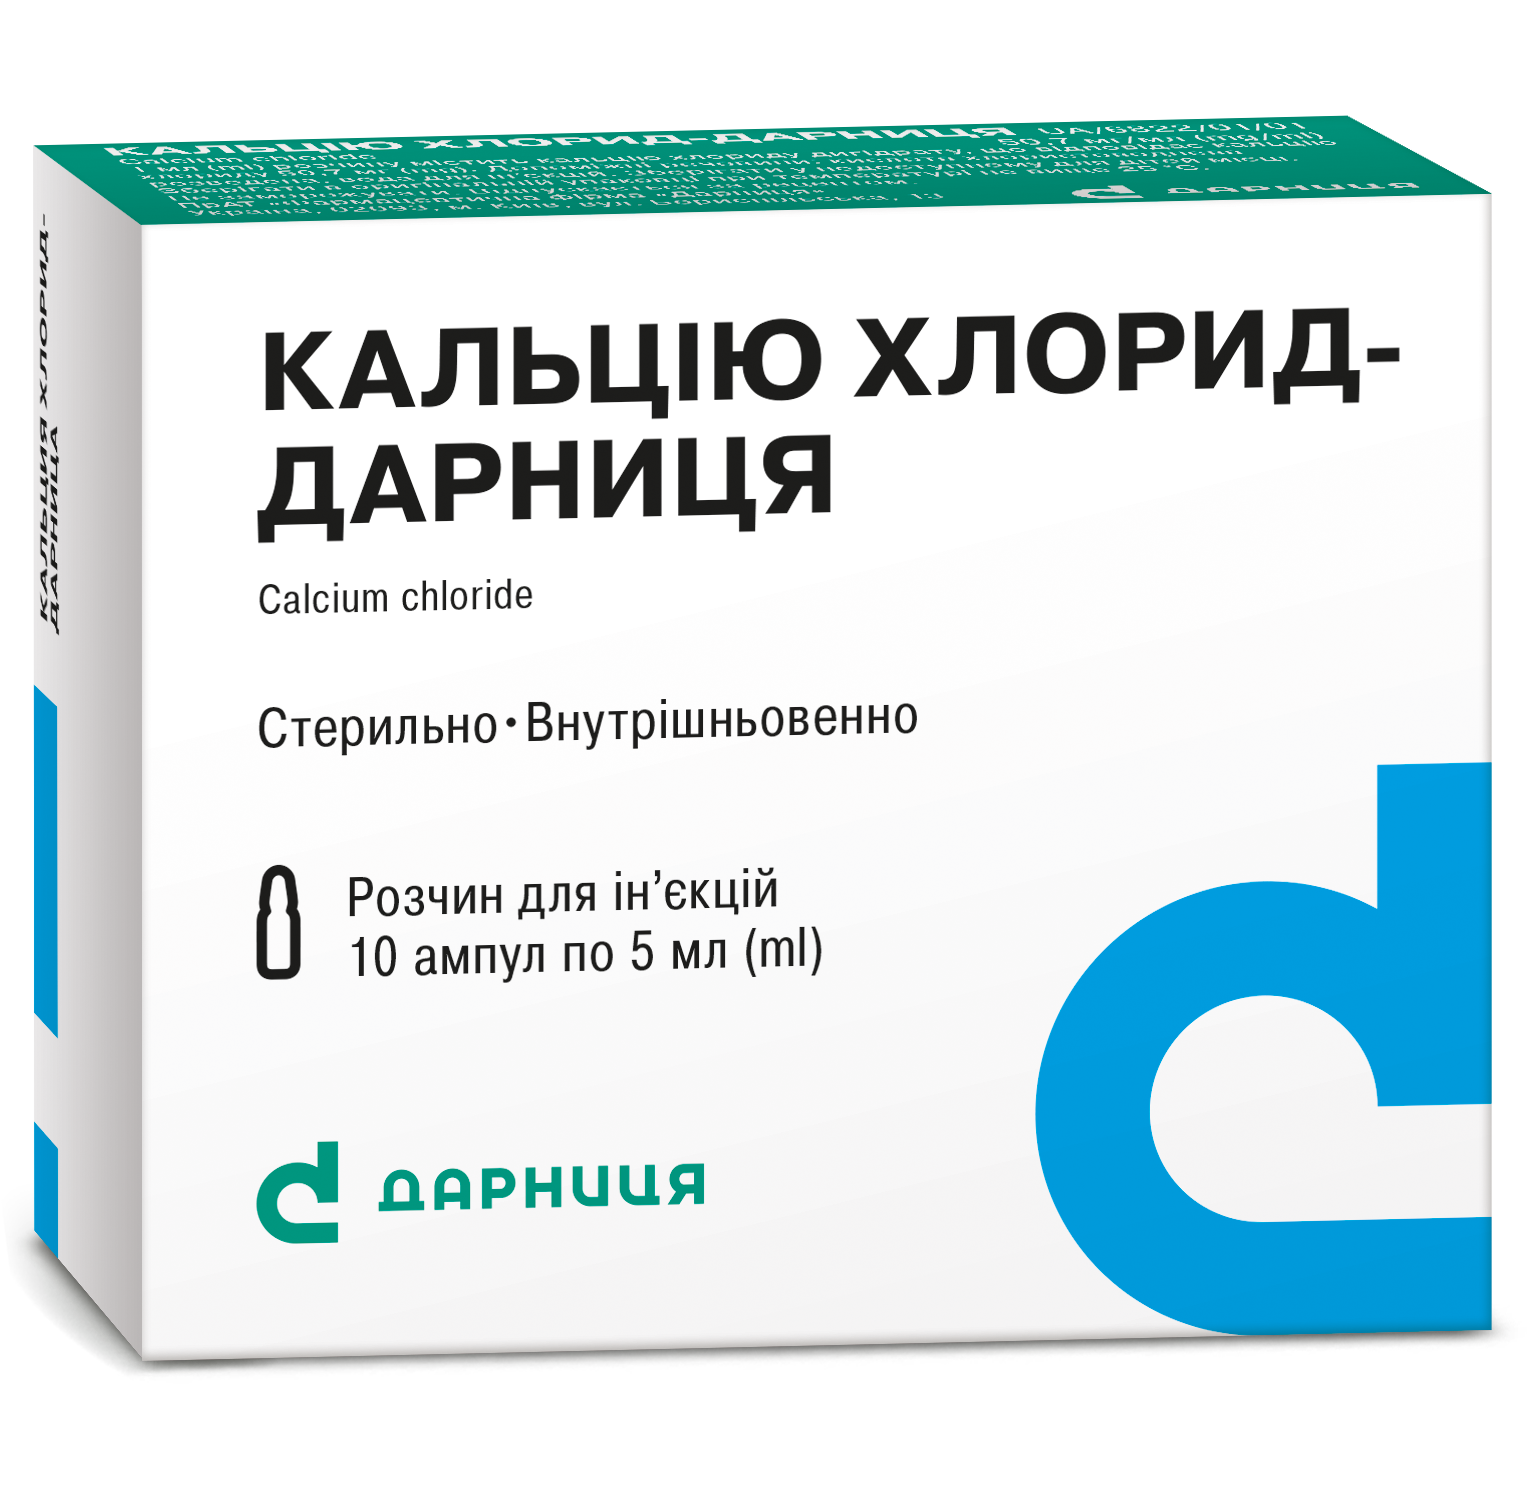 Calcium chloride-Darnitsa